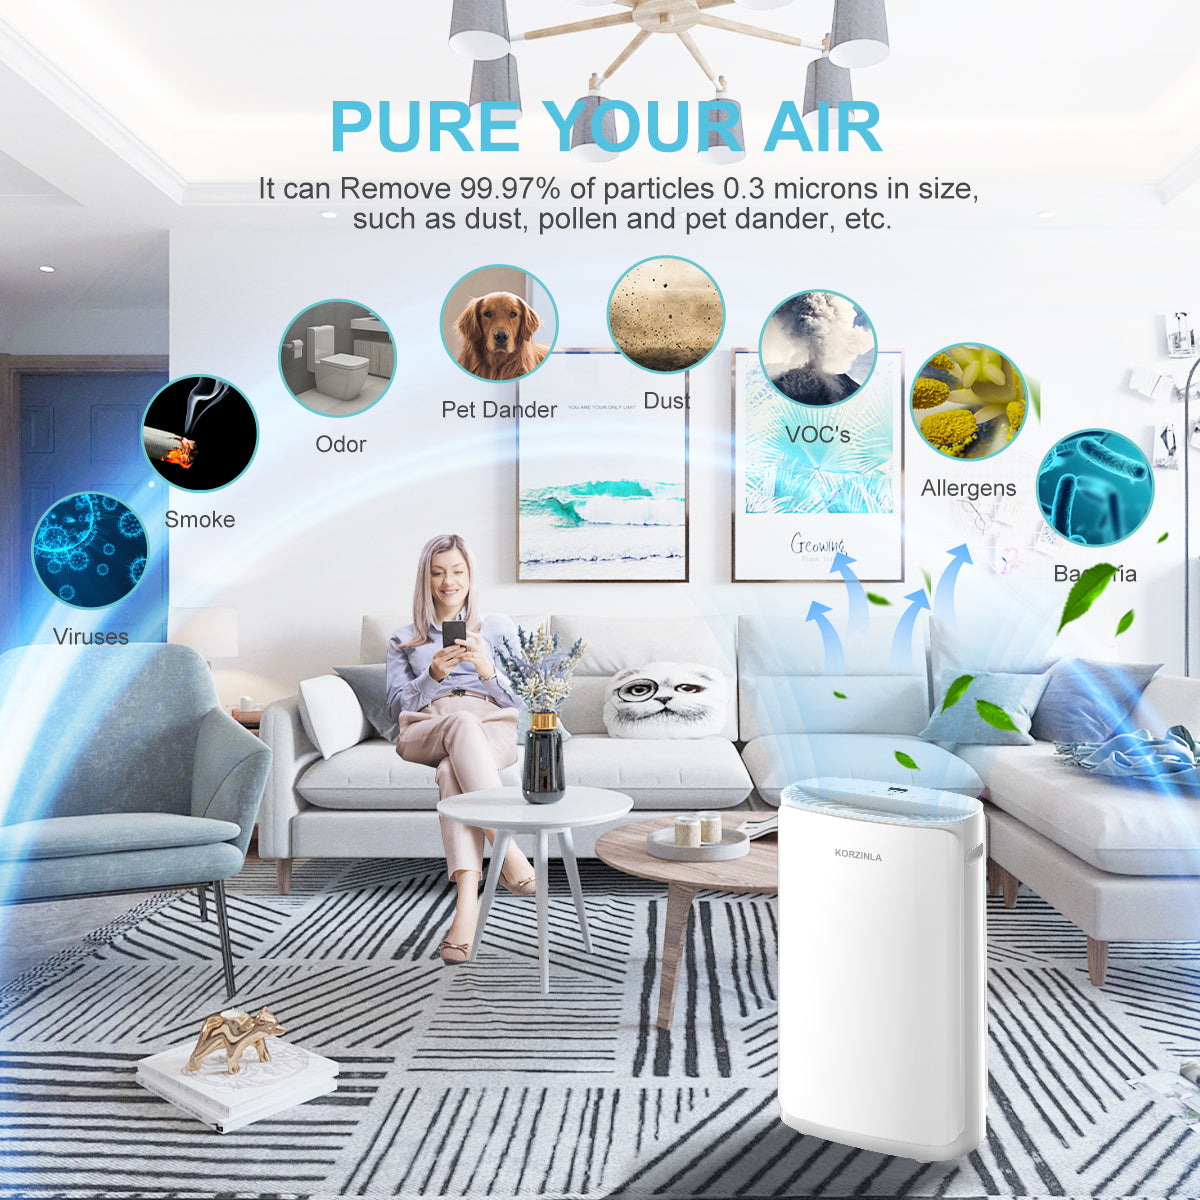 Air Purifiers for Home Large Room Allergies, H13 True HEPA Filter for Allergies, Smoke, Dust, Pollen, Quiet Odor Eliminators for Bedroom, Pet Hair Remover, Remove 99.97% Dust Smoke Mold Pollen, White